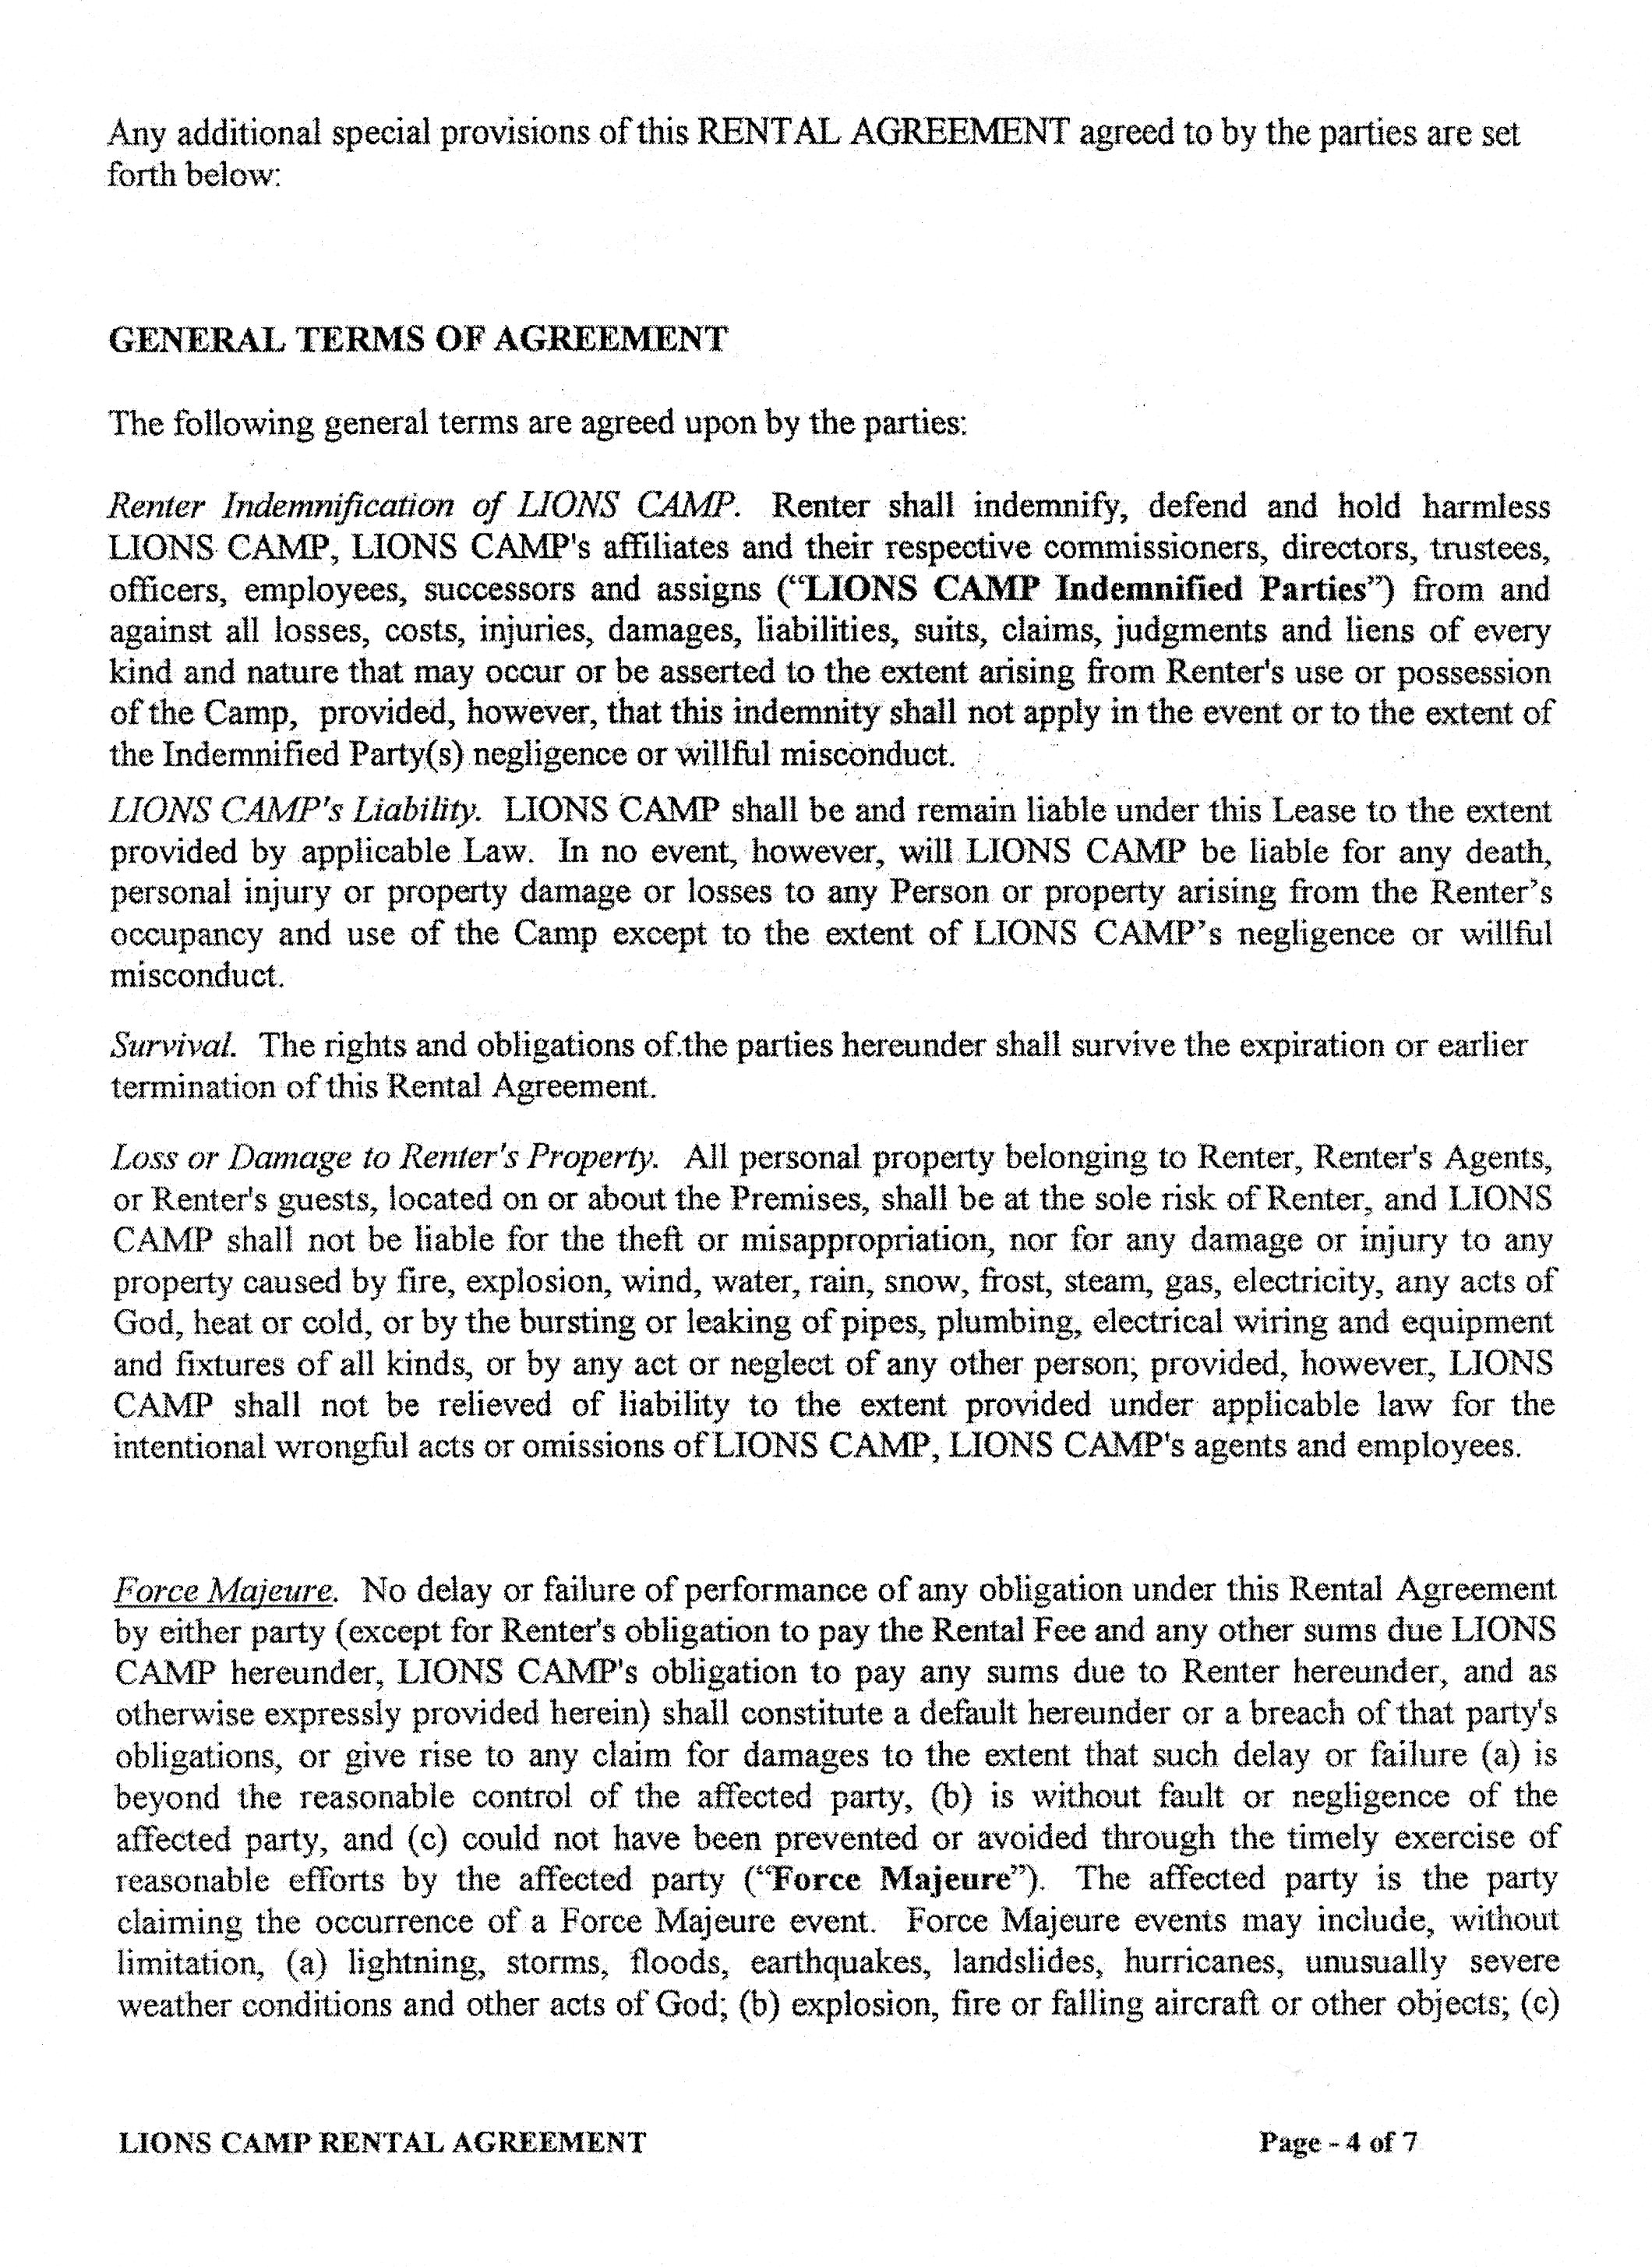 Rental Agreement Pg. 4 of 7